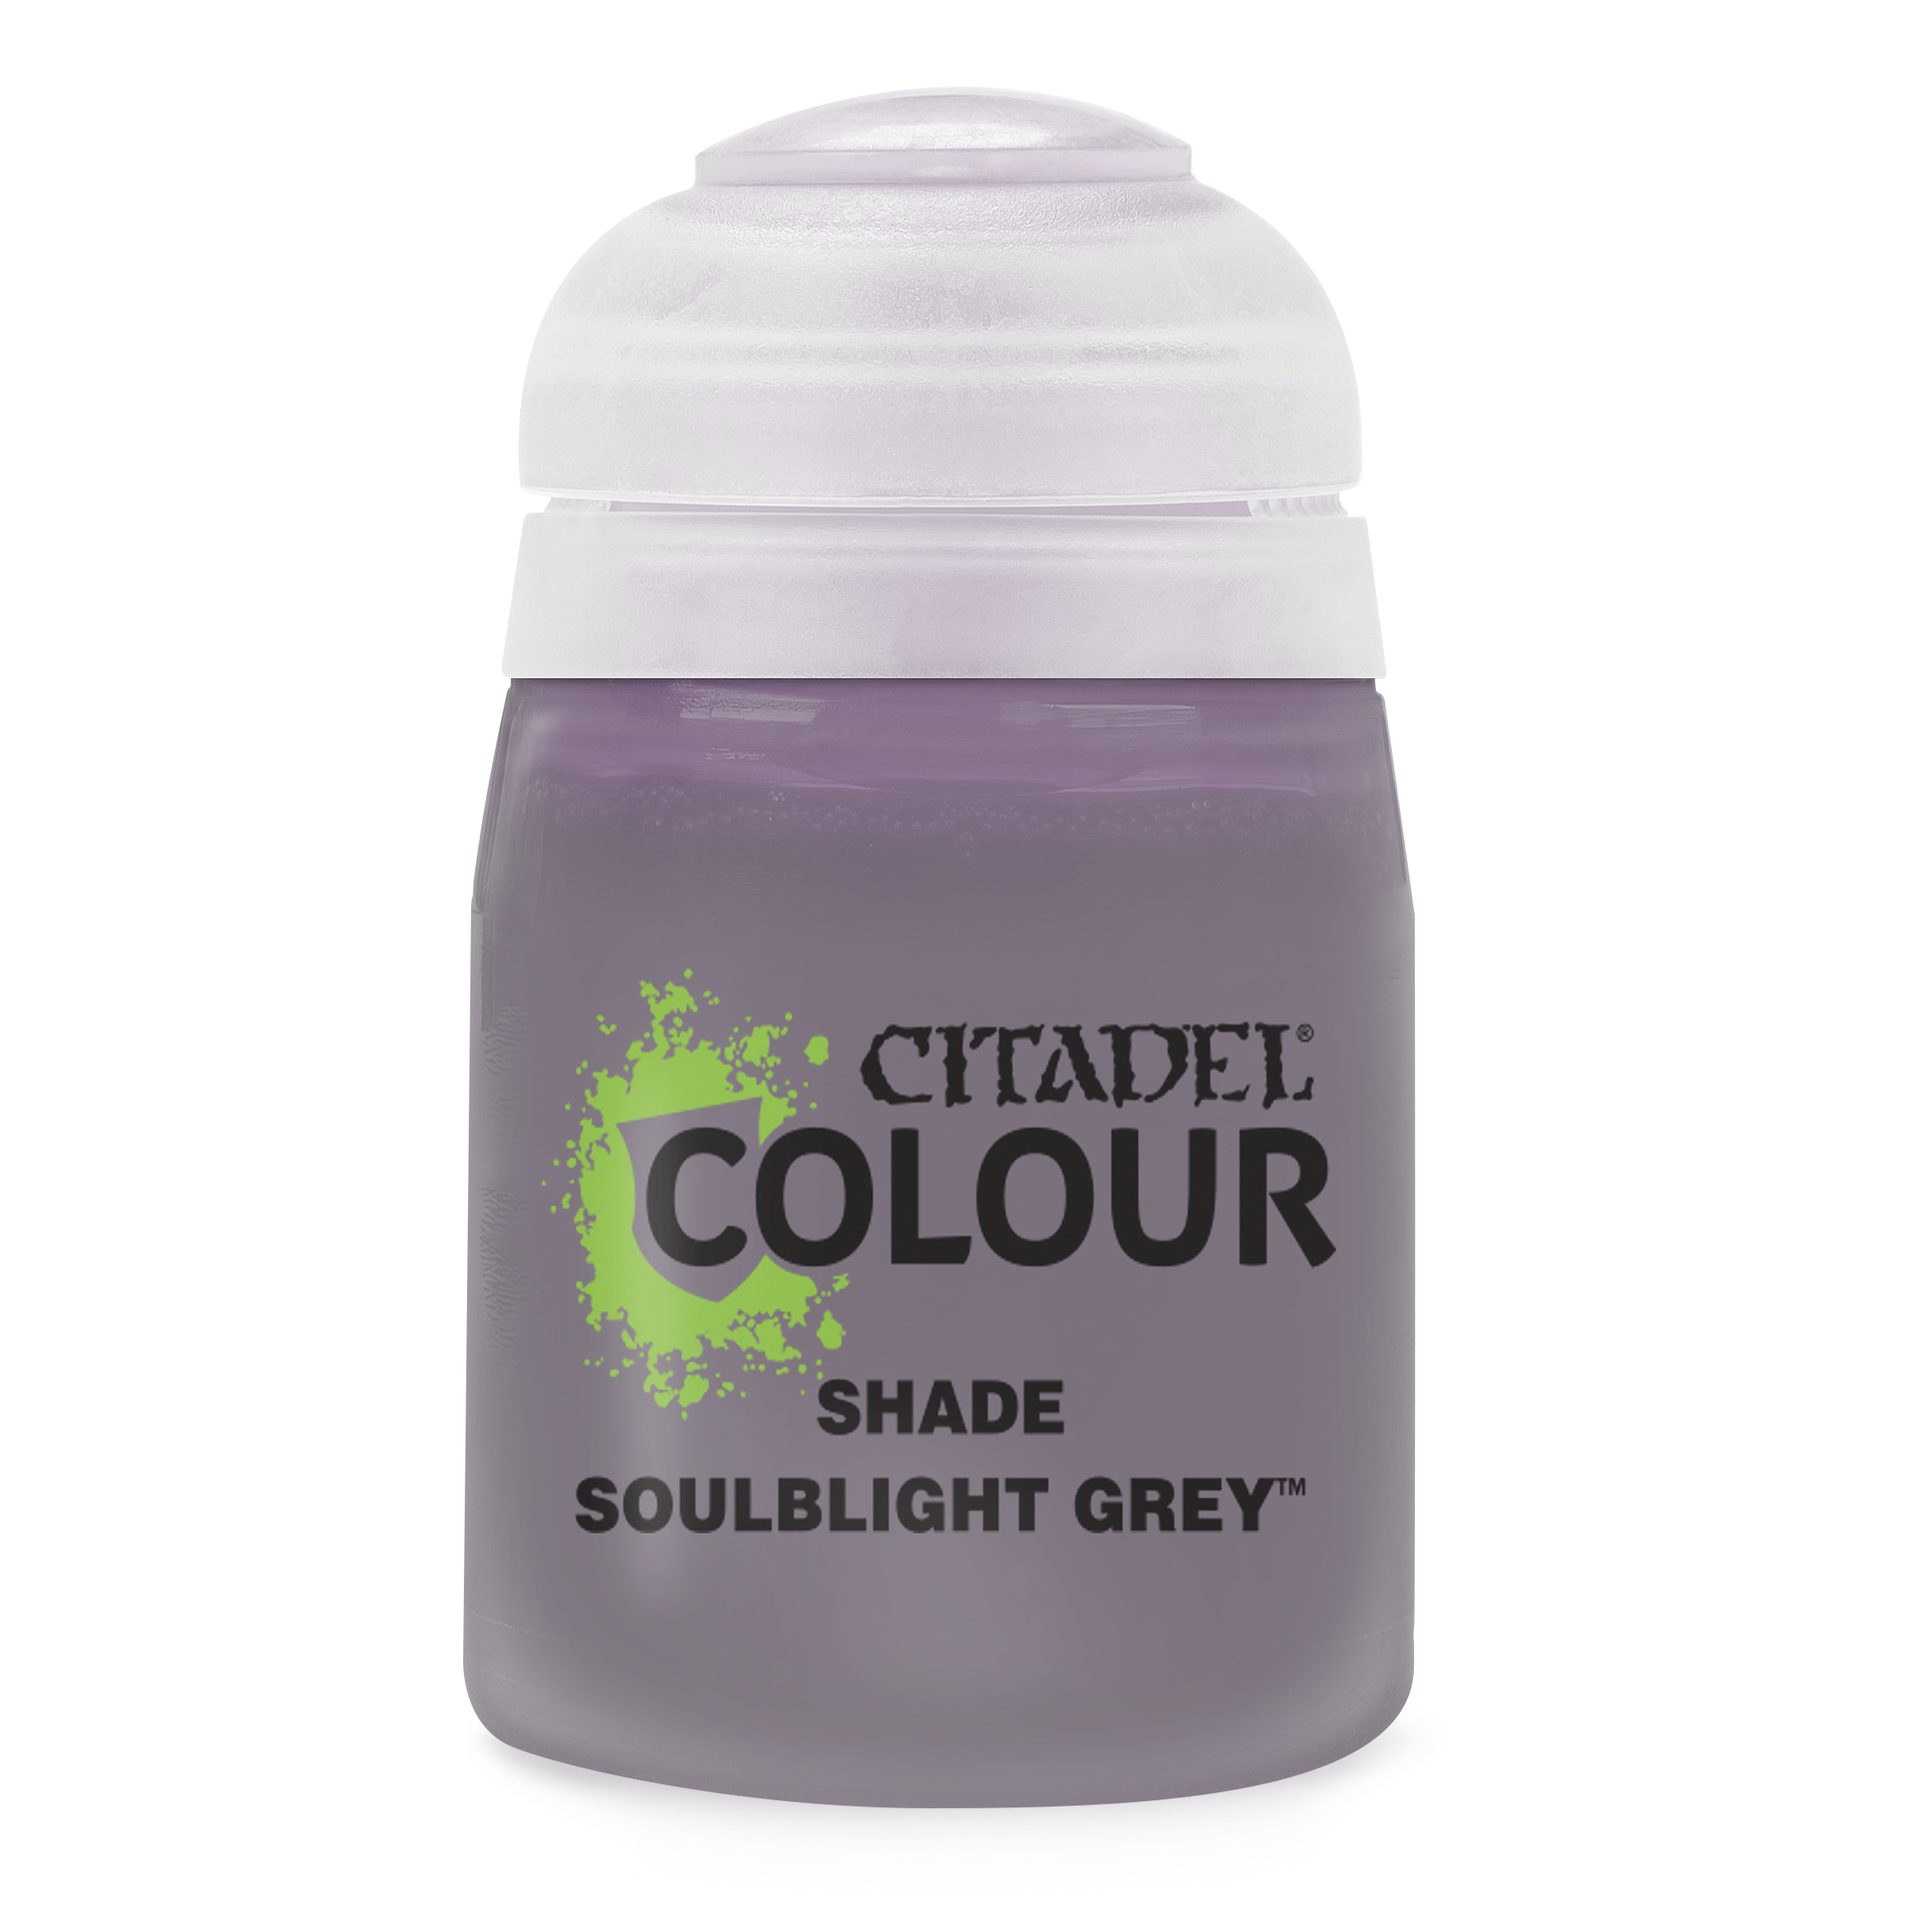 Shade Soulblight Grey- Citadel Colour